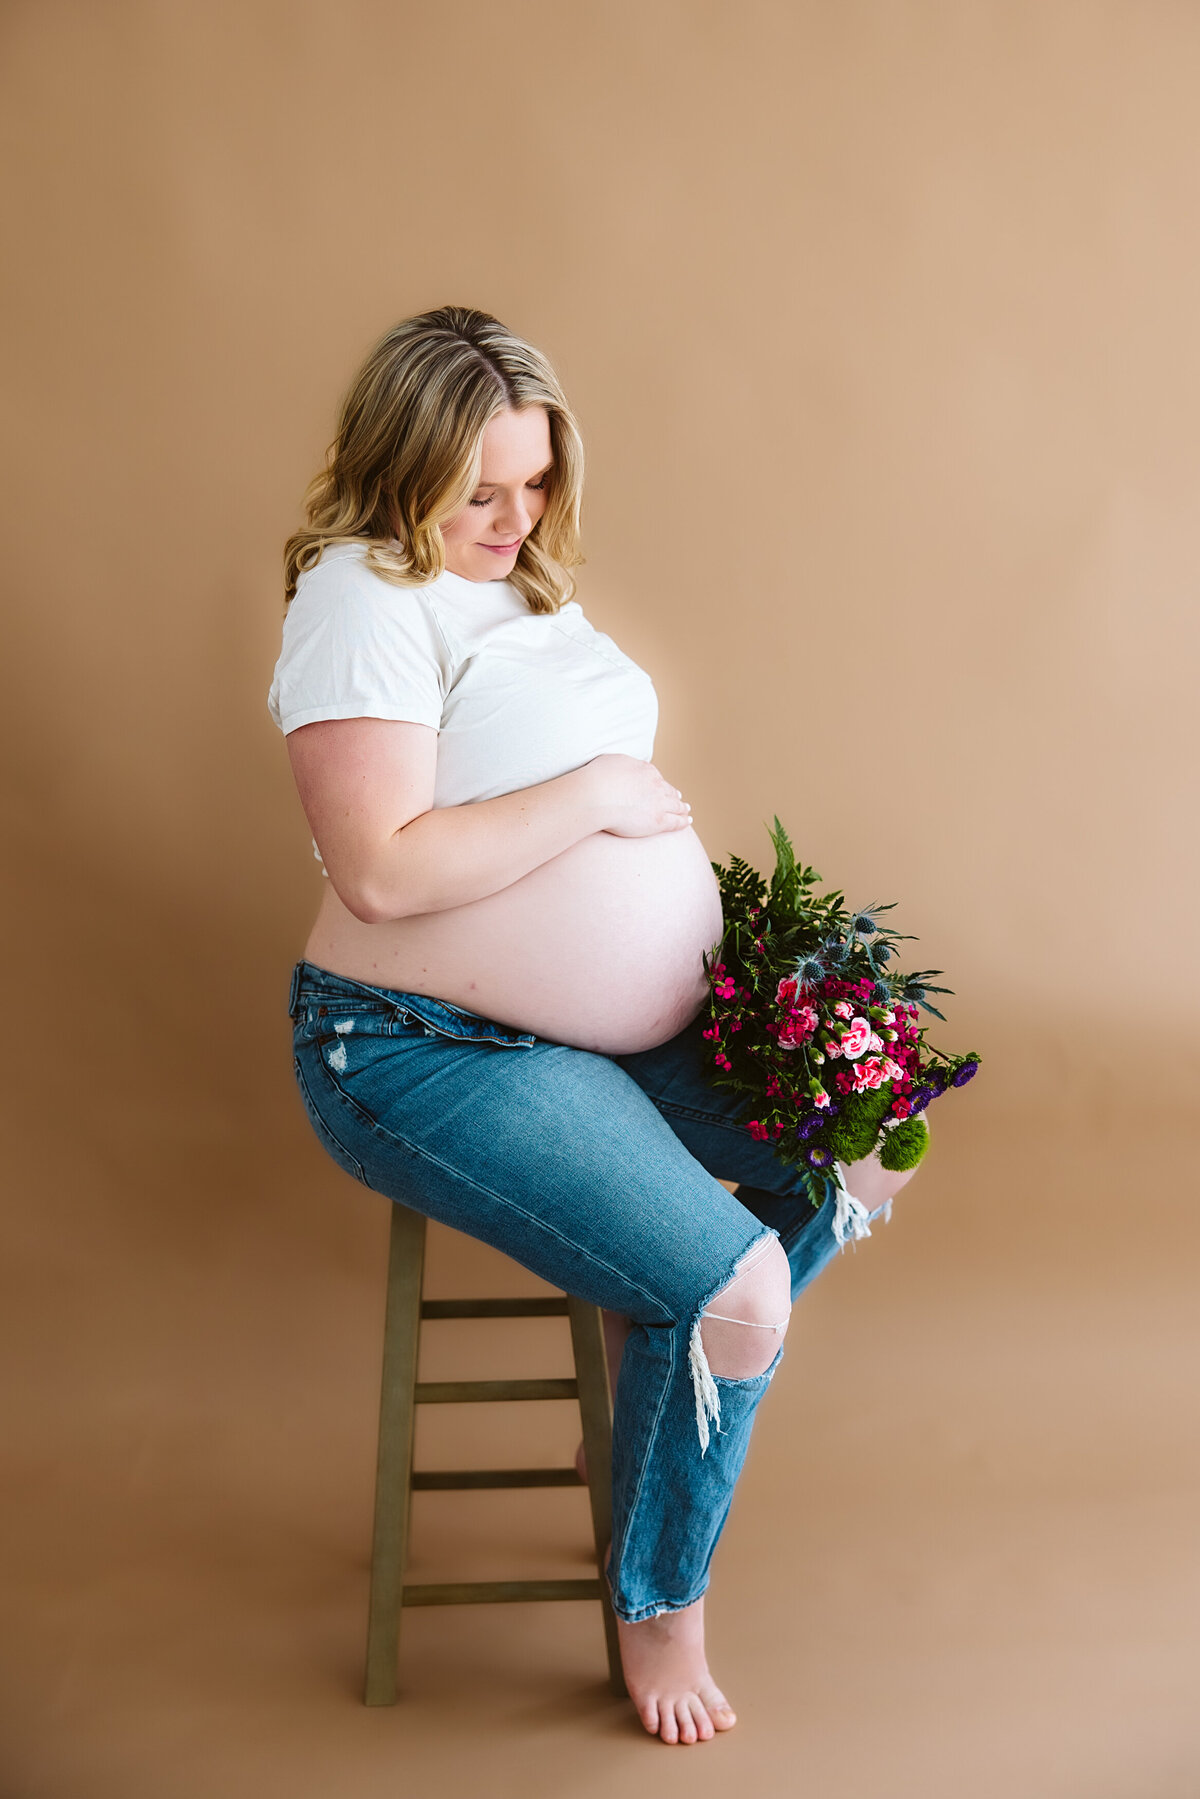 Minnesota-Alyssa Ashley Photography-Prouty maternity session-23